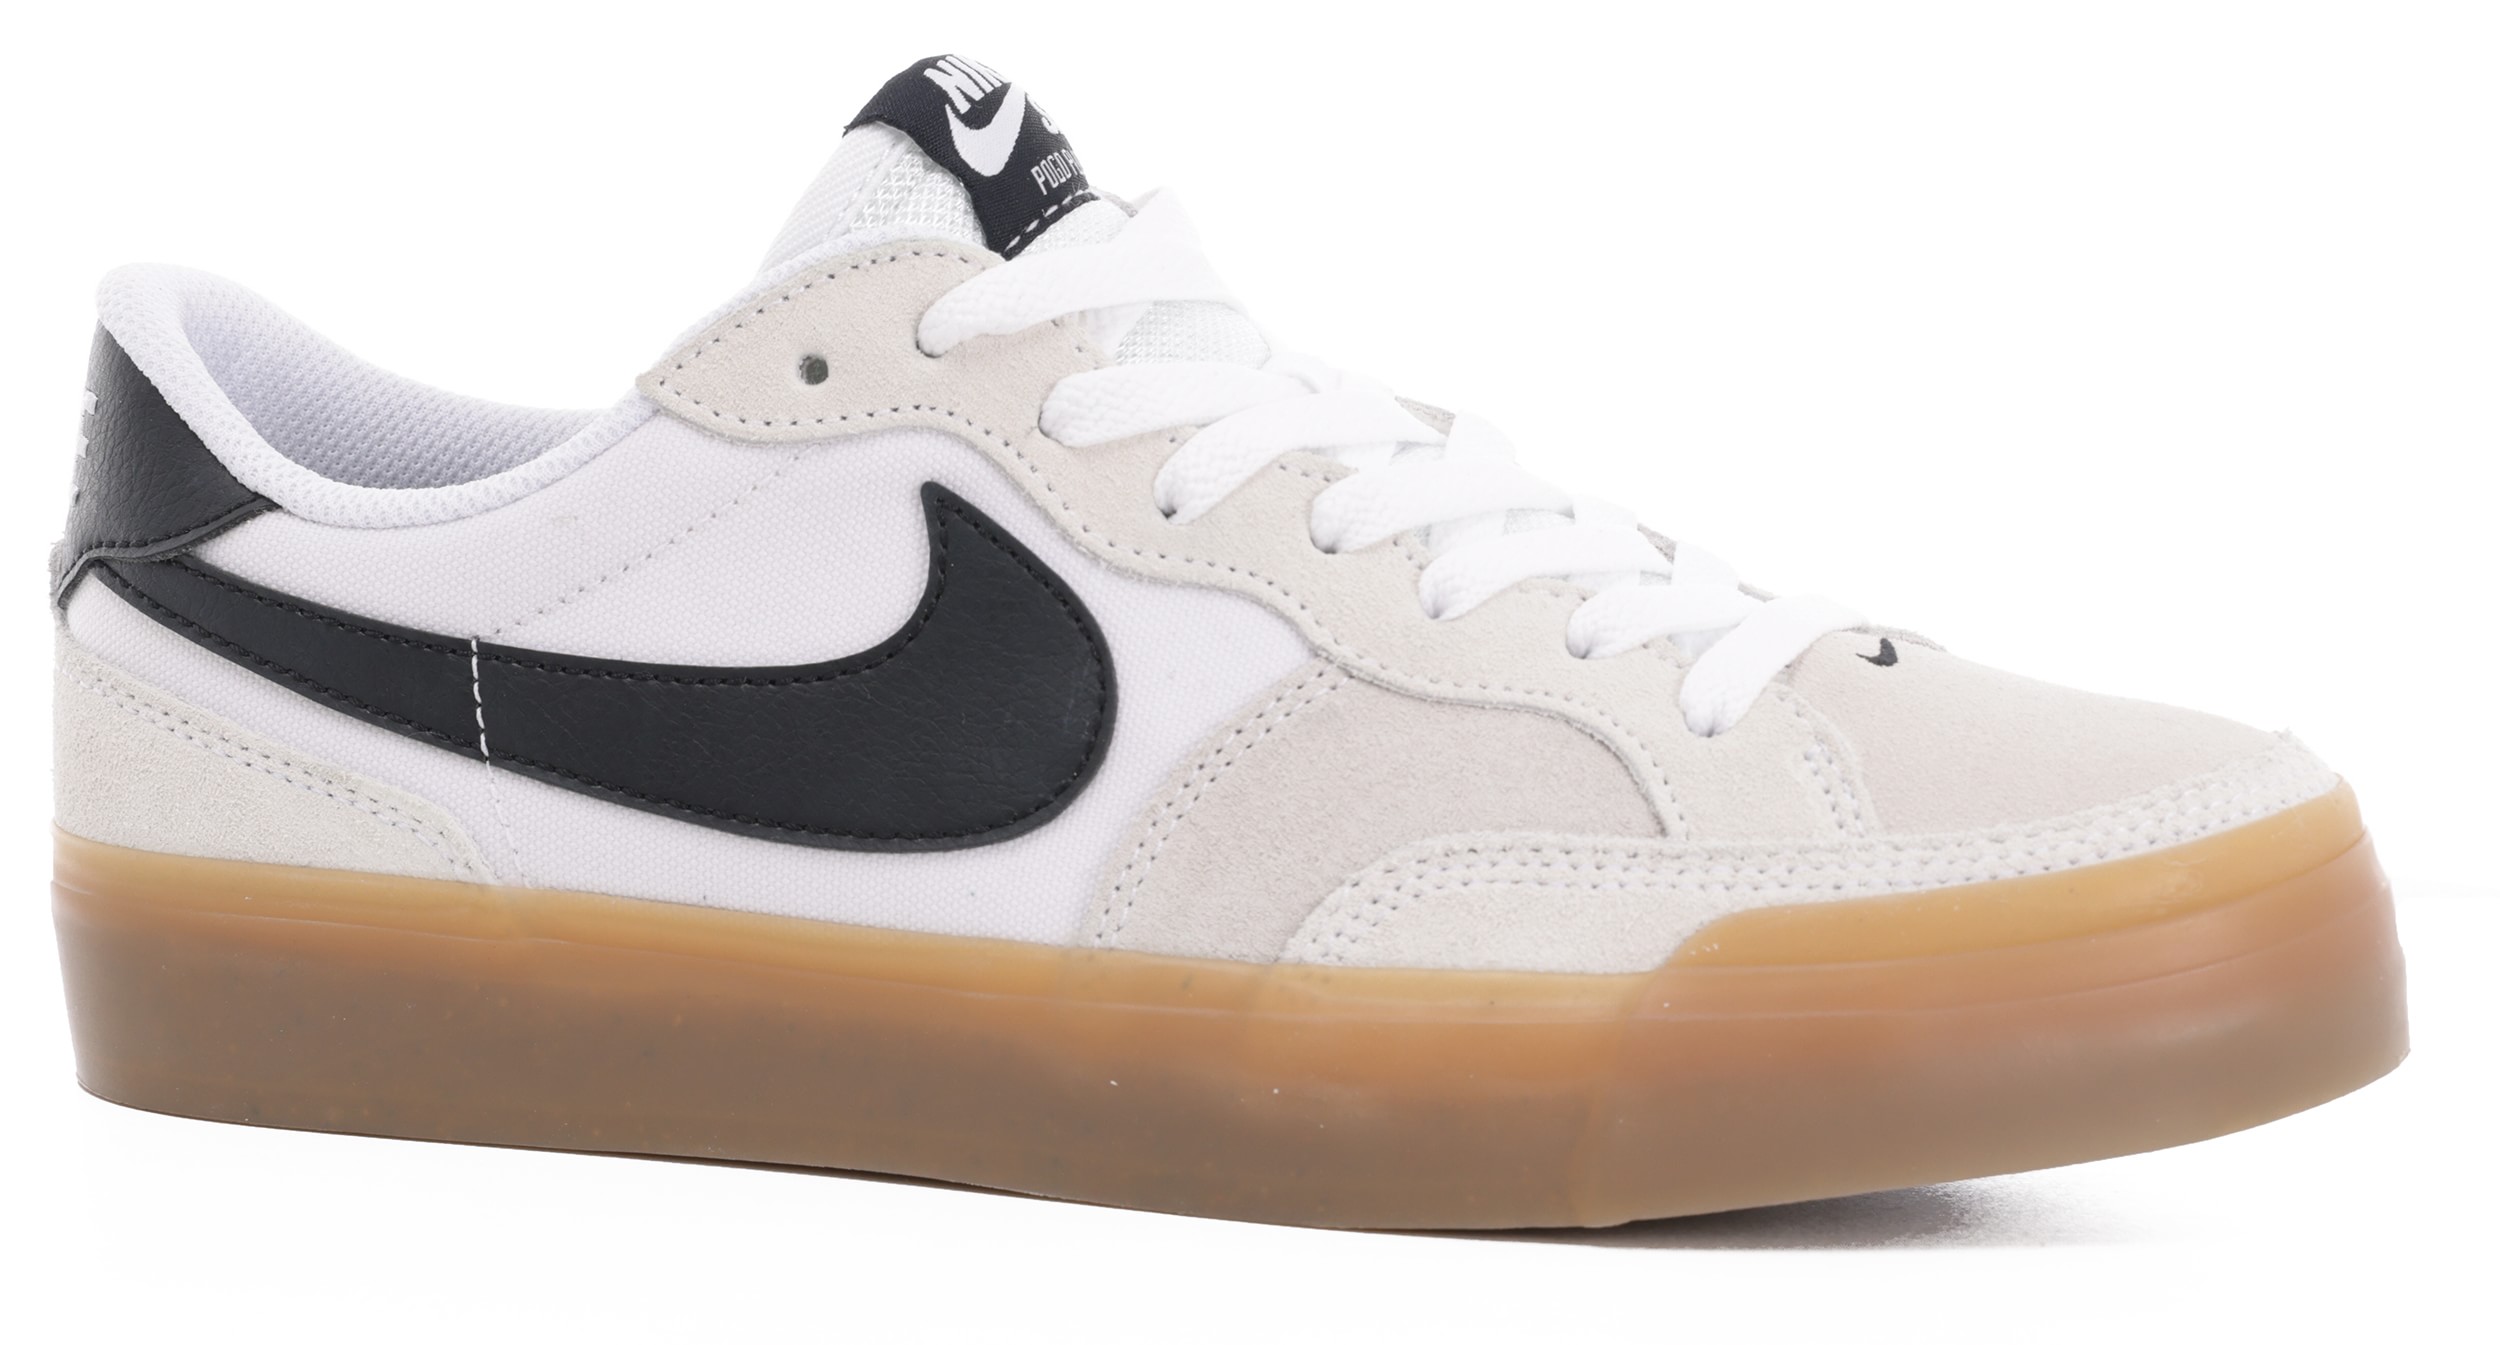 Nike SB Pogo Shoes white/blackwhitegum light brown Free Shipping